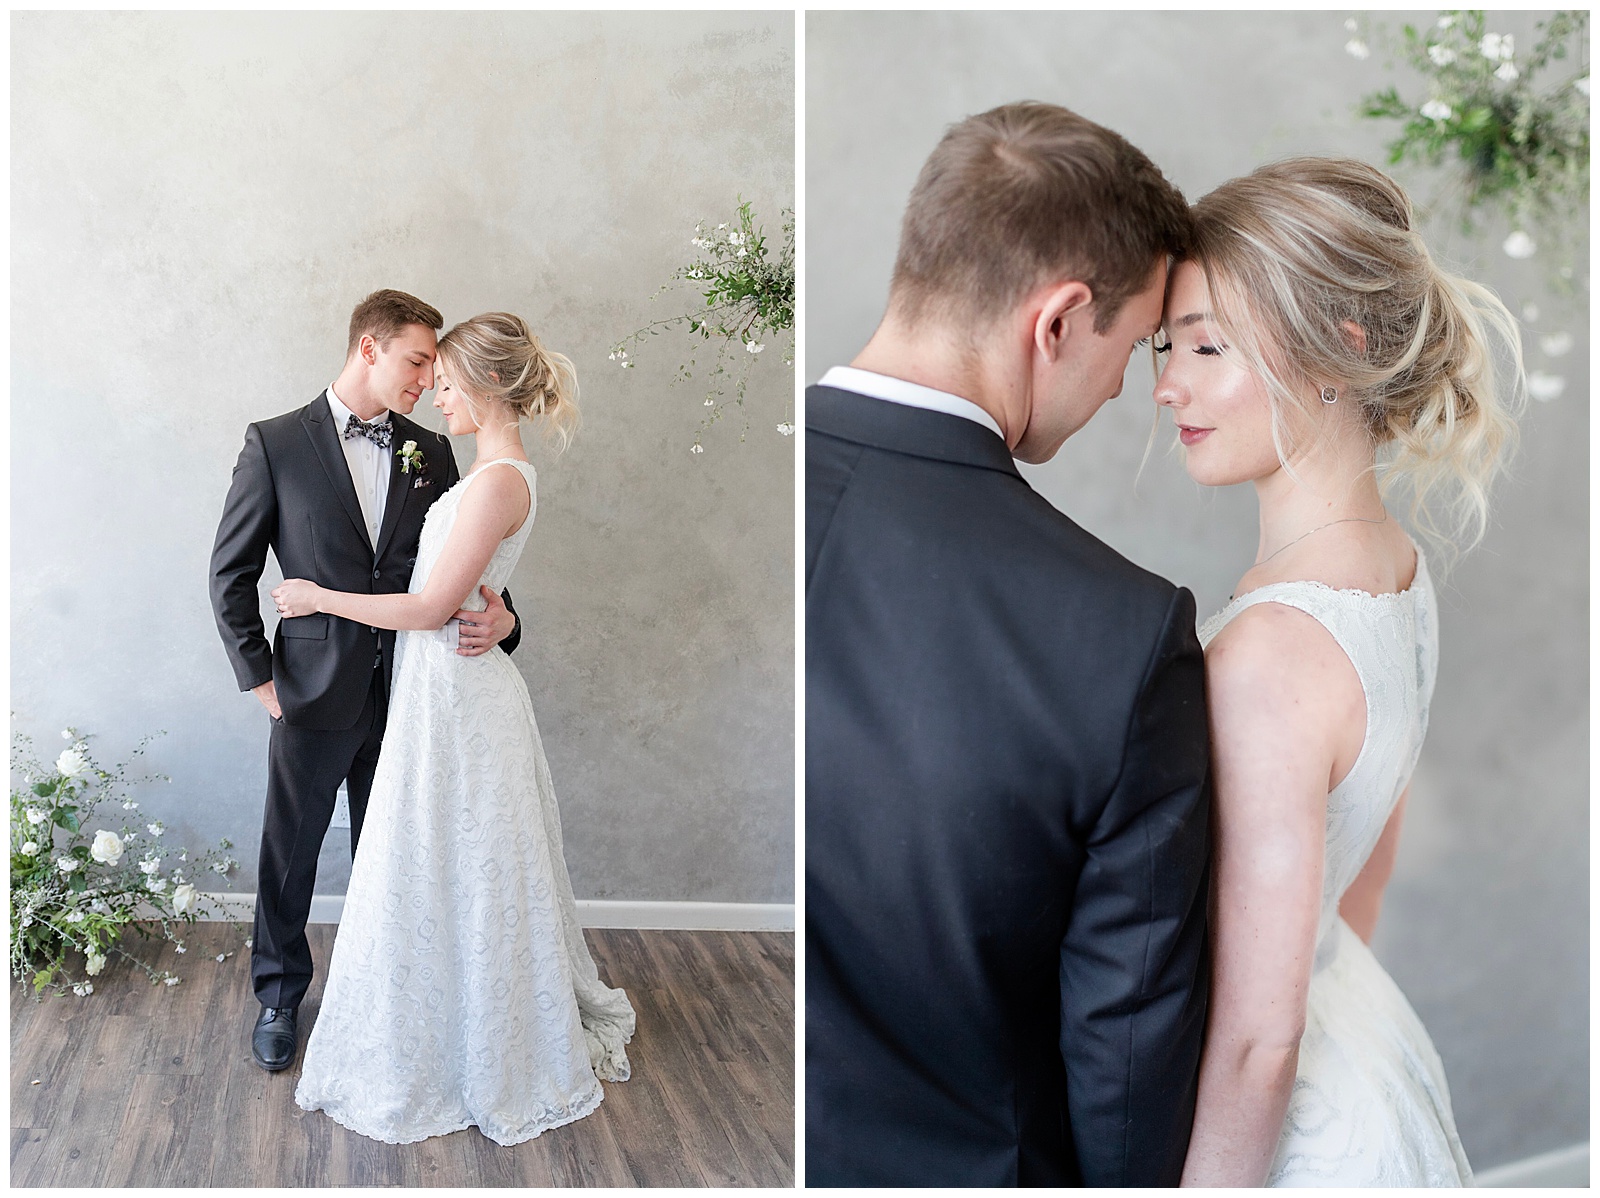 Wedding Photographers Phoenix | Romantic Styled Shoot